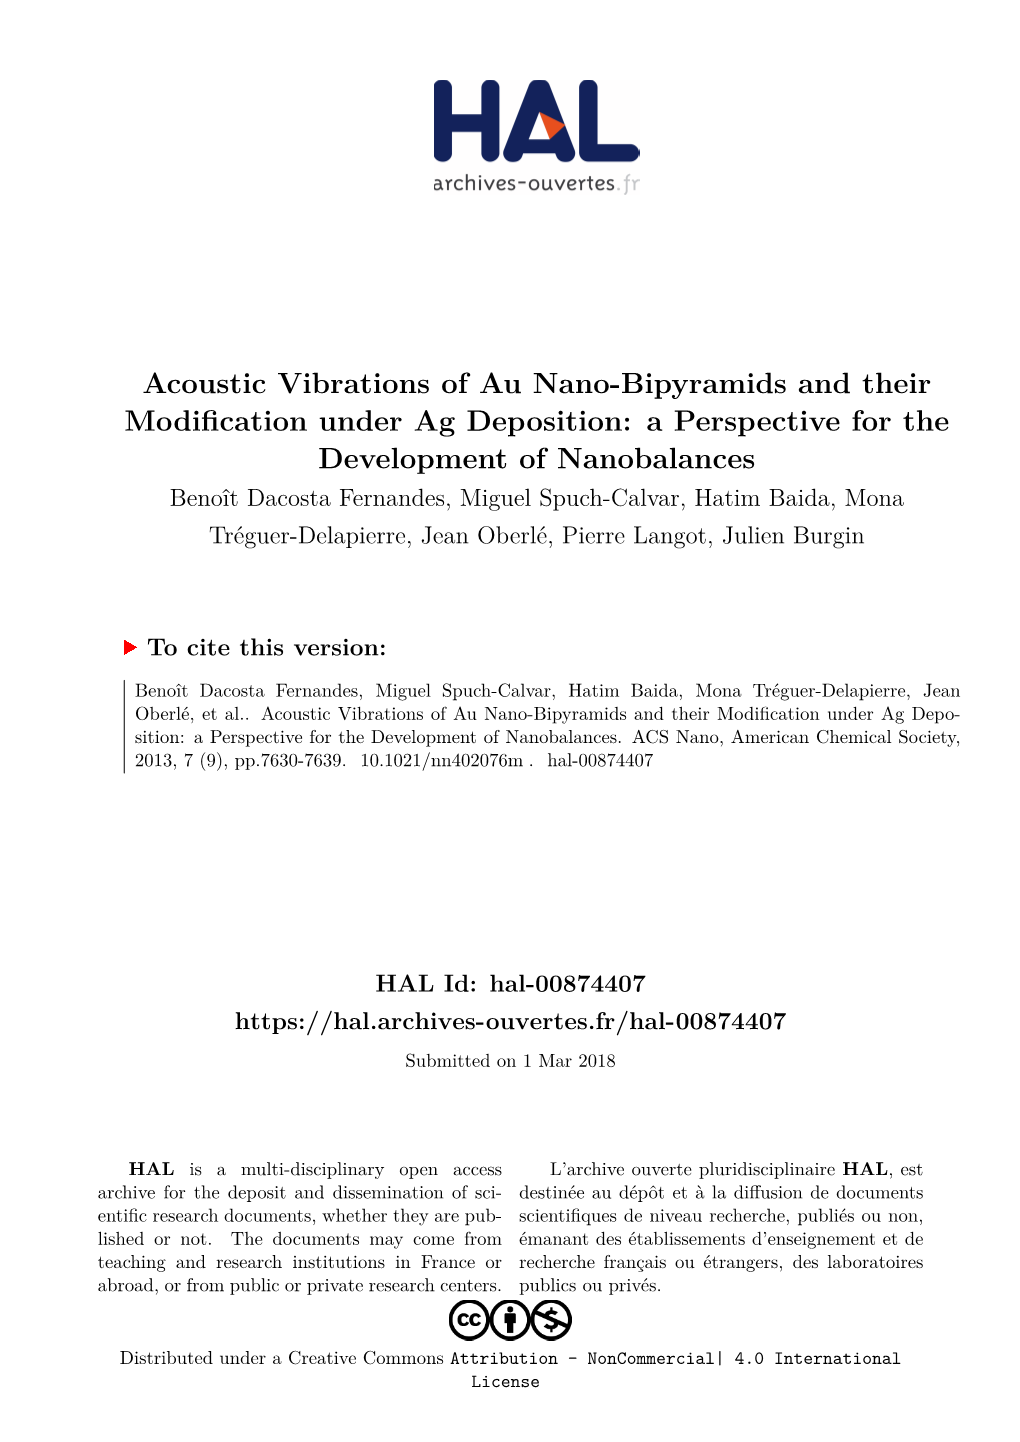 Acoustic Vibrations of Au Nano-Bipyramids and Their